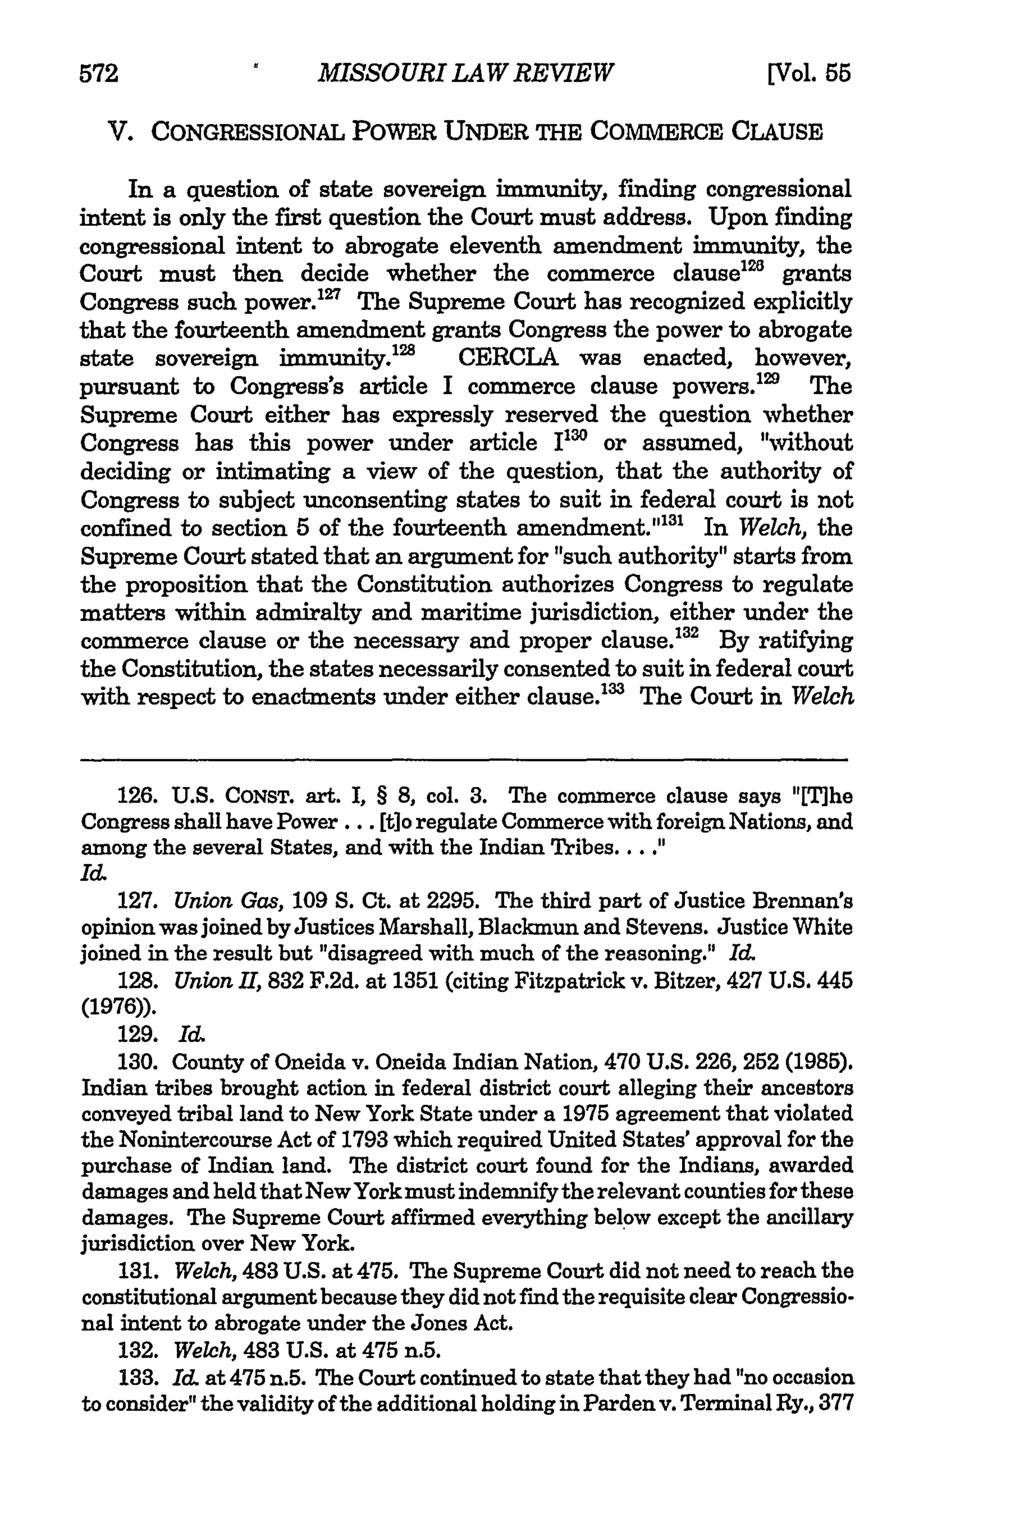 572 Missouri Law Review, Vol. 55, Iss. 2 [1990], Art. 4 MISSOURI LAW REVIEW [Vol. 55 V.